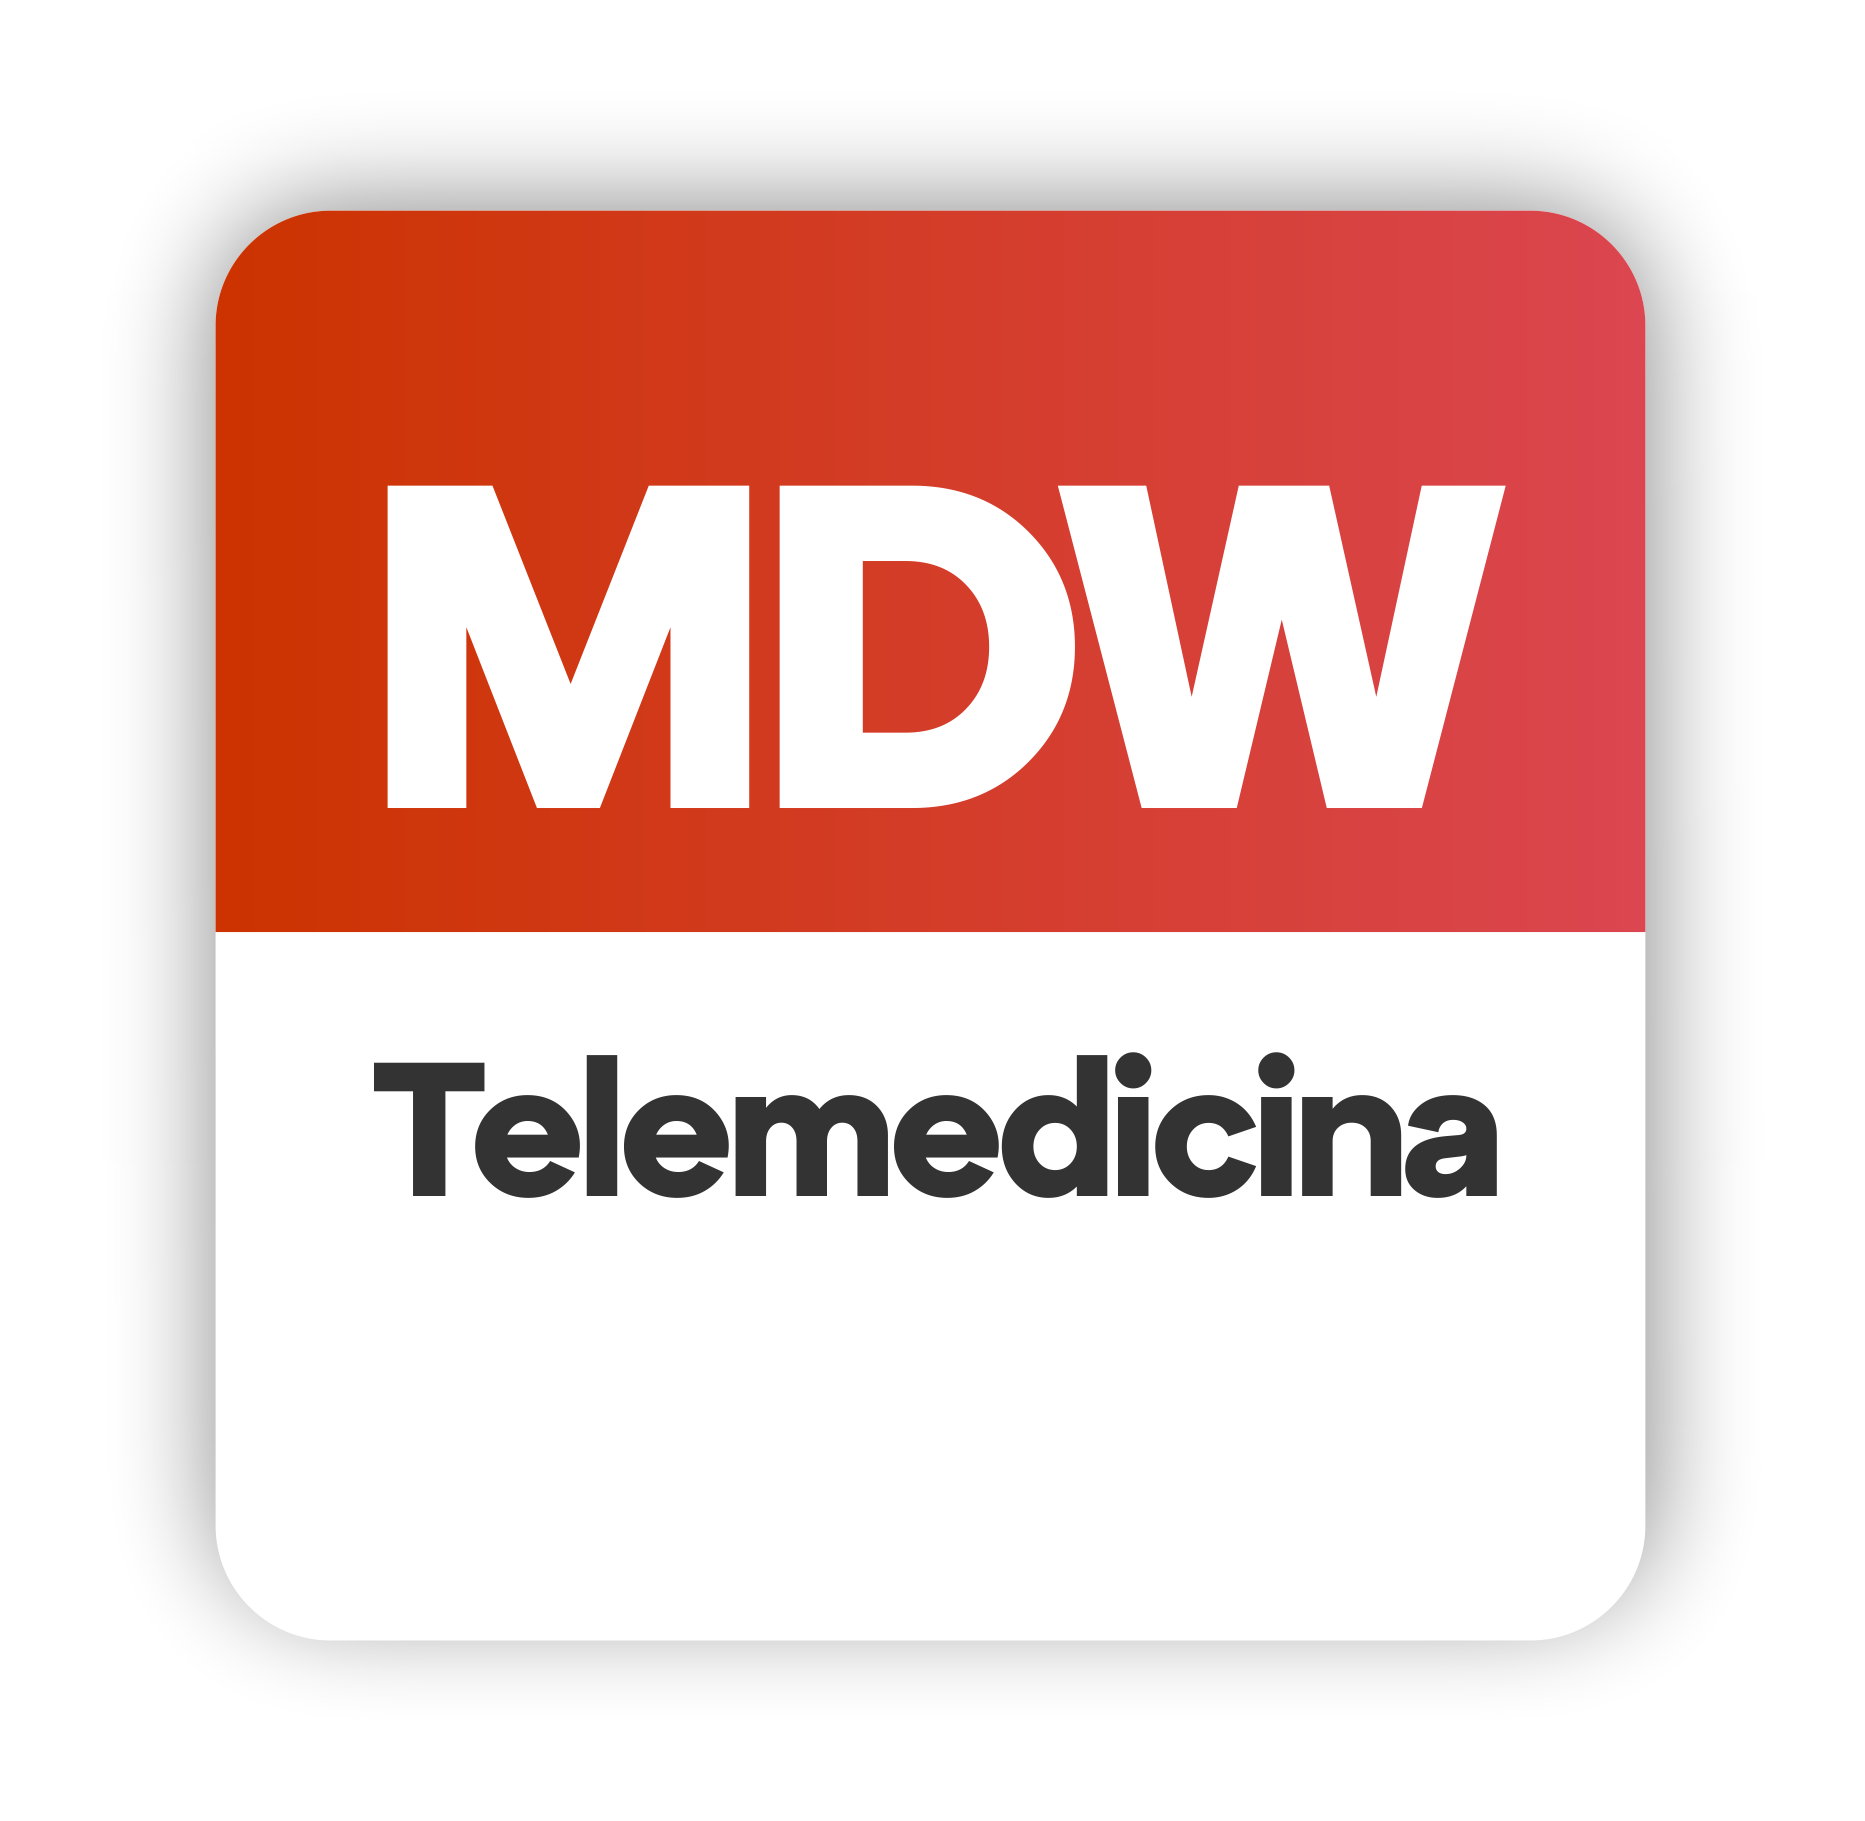 Medware Telemedicina